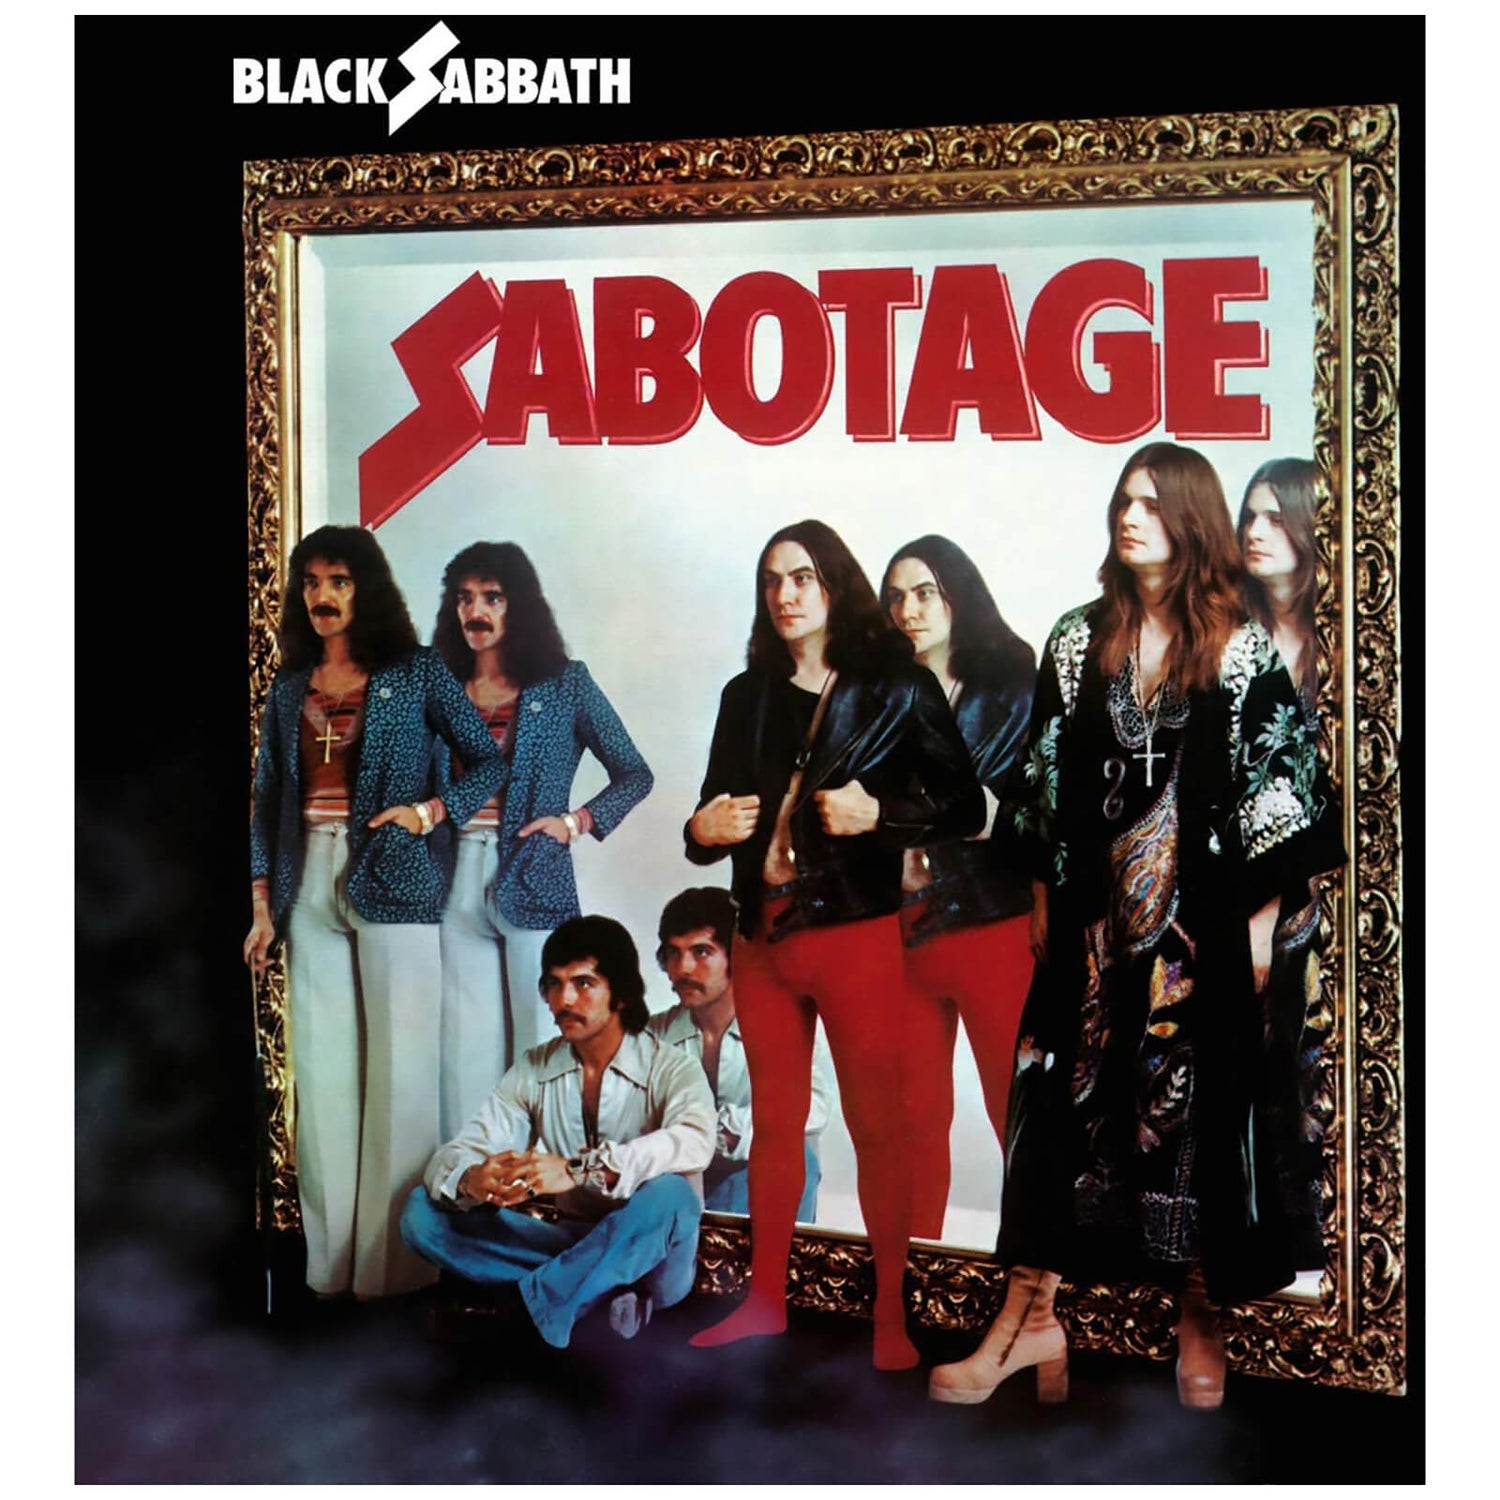 Black Sabbath - Sabotage Vinyl